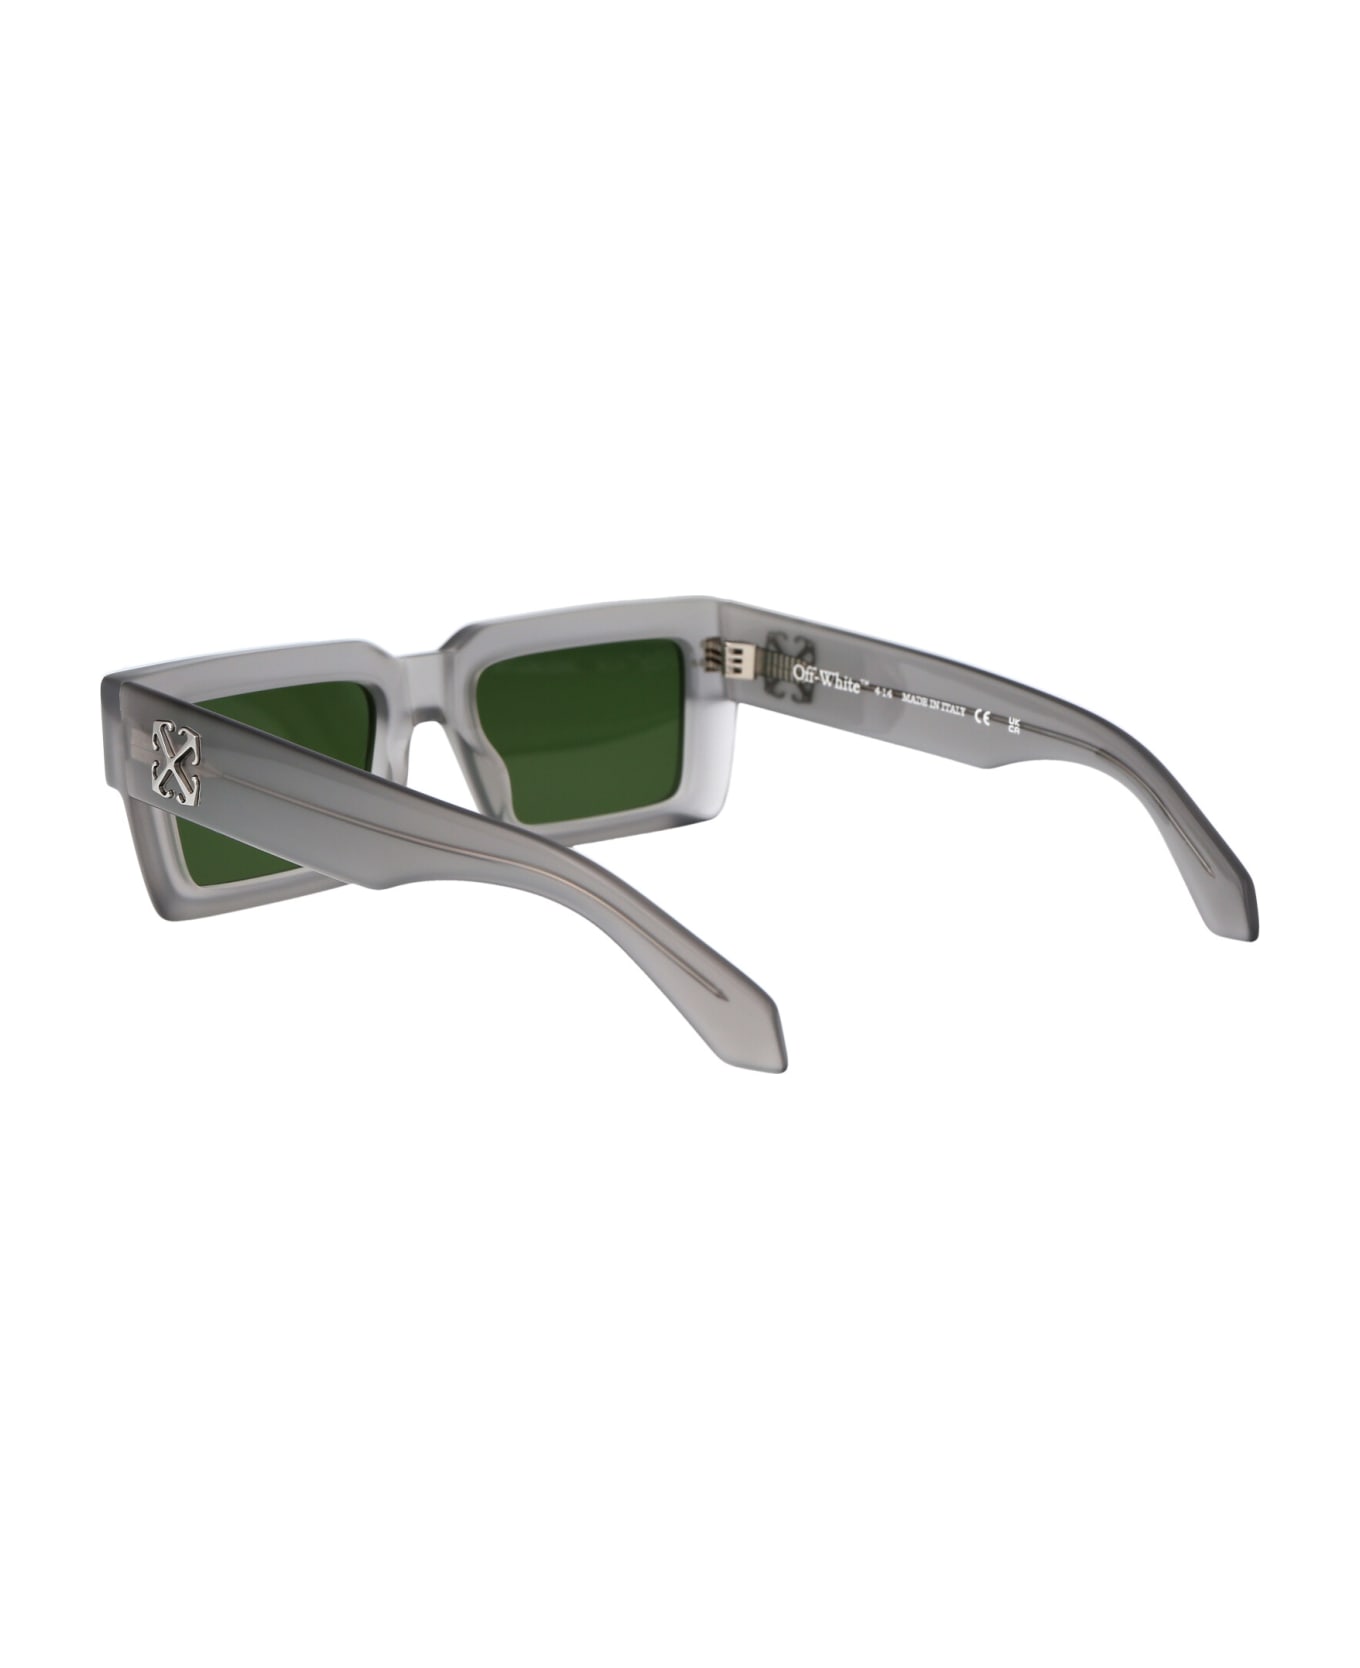 Off-White Moberly Sunglasses - 0855 GREY